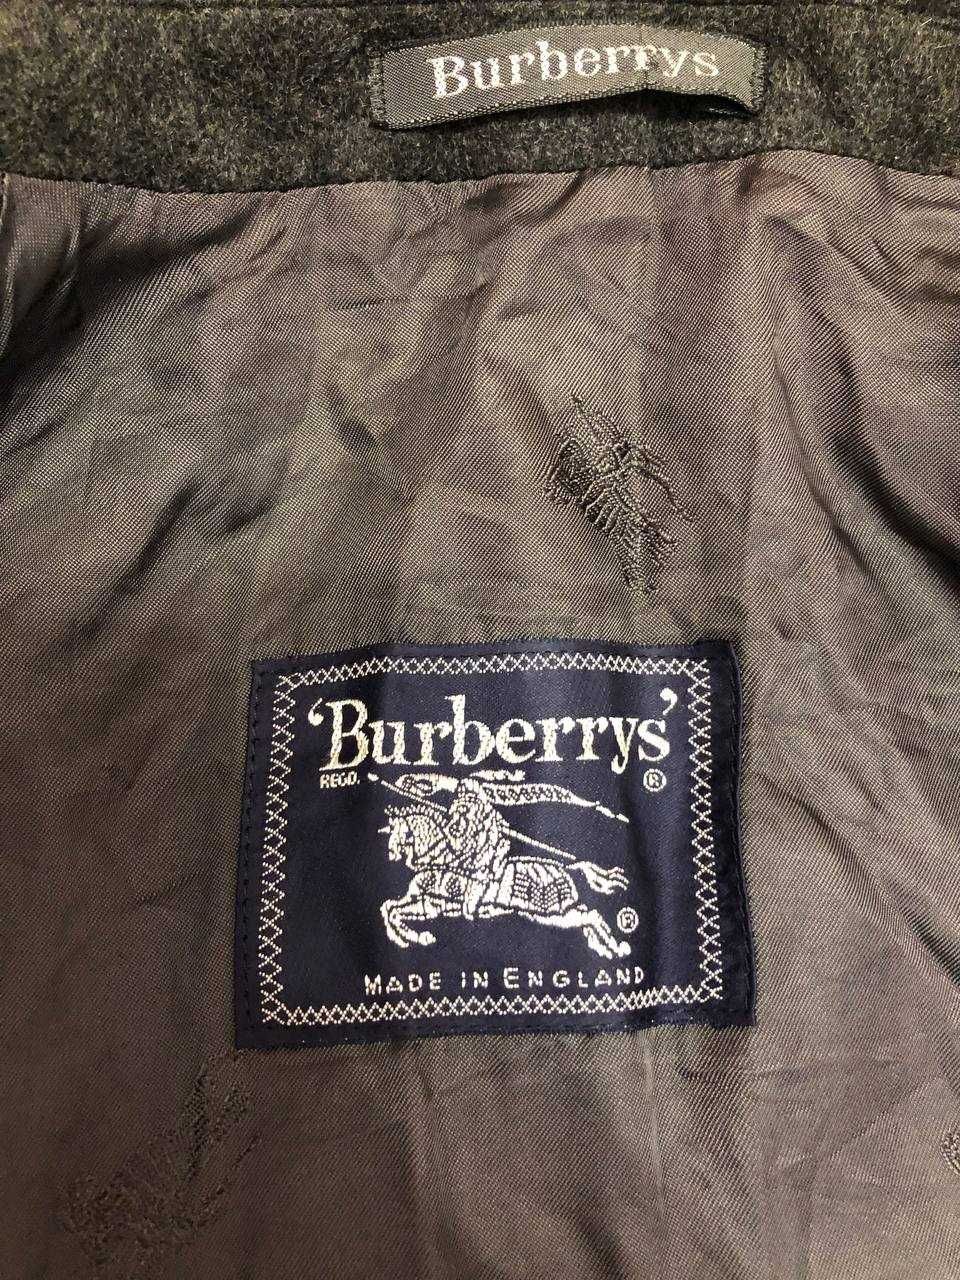 burberrys wool and cashmere coat grey vintage пальто тренч barbour